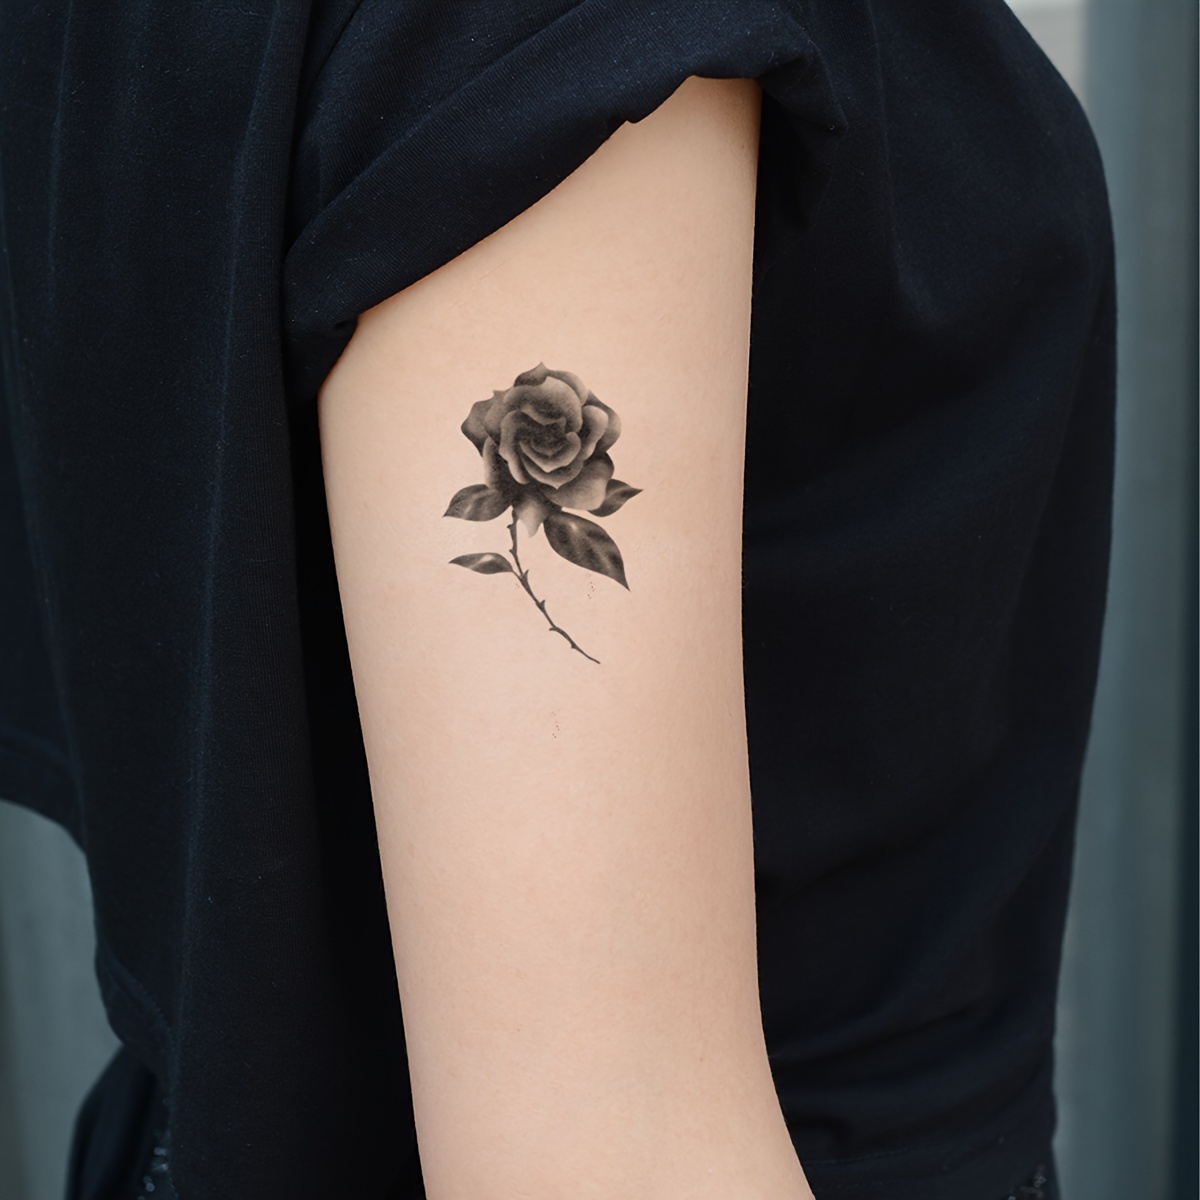 Triangle Flower Tattoo Rose Peony Black Sketch Rose Daisy Sunflower Leaf  Body Waist Arm Neck Temporary Art Tattoos Bkseries 